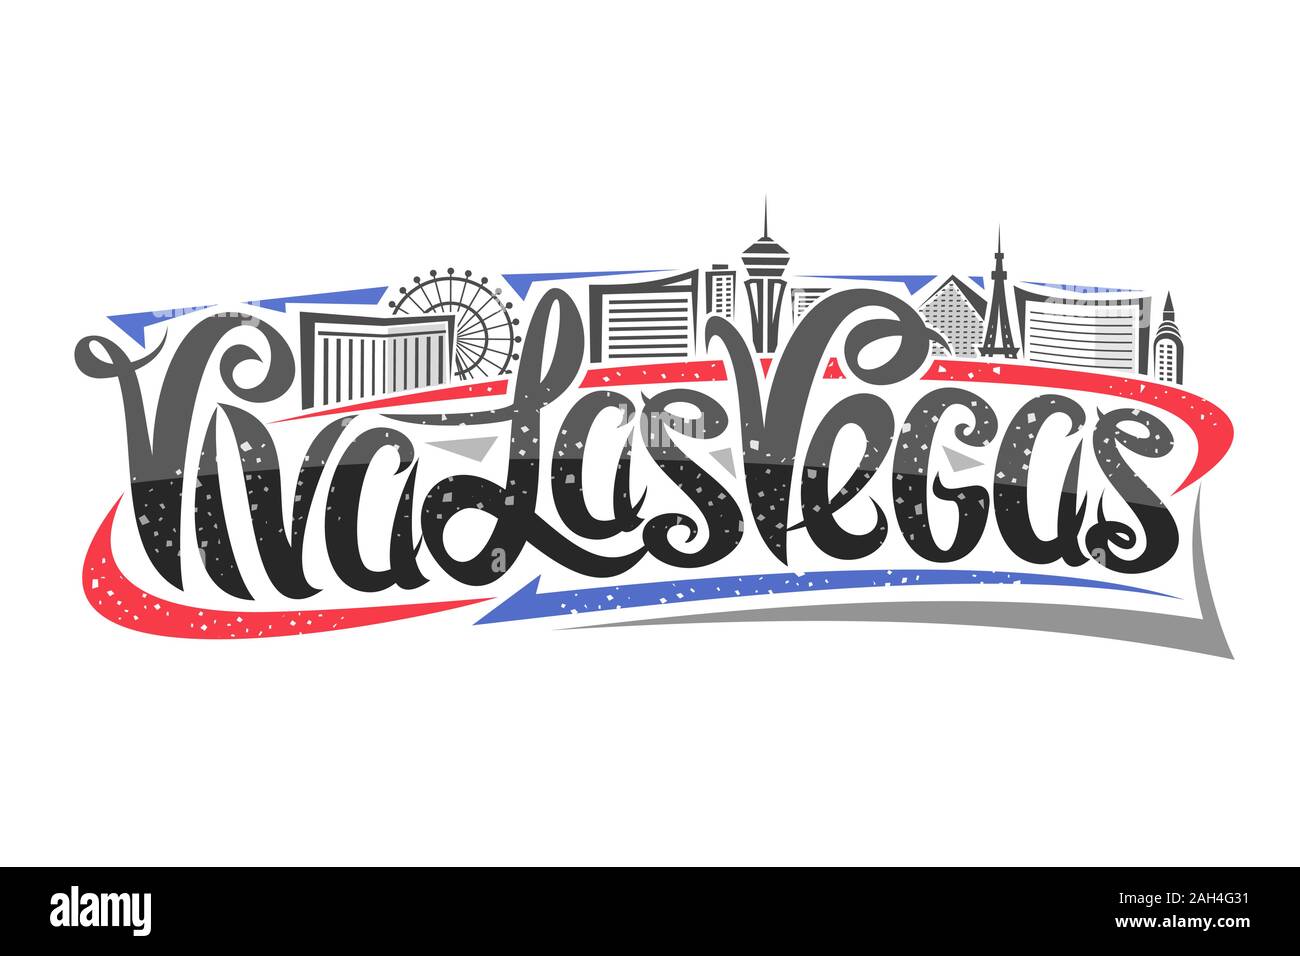 Vector logo for Las Vegas, decorative outline illustration with abstract architecture eiffel tower and ferris wheel, elegant lettering - viva las vega Stock Vector